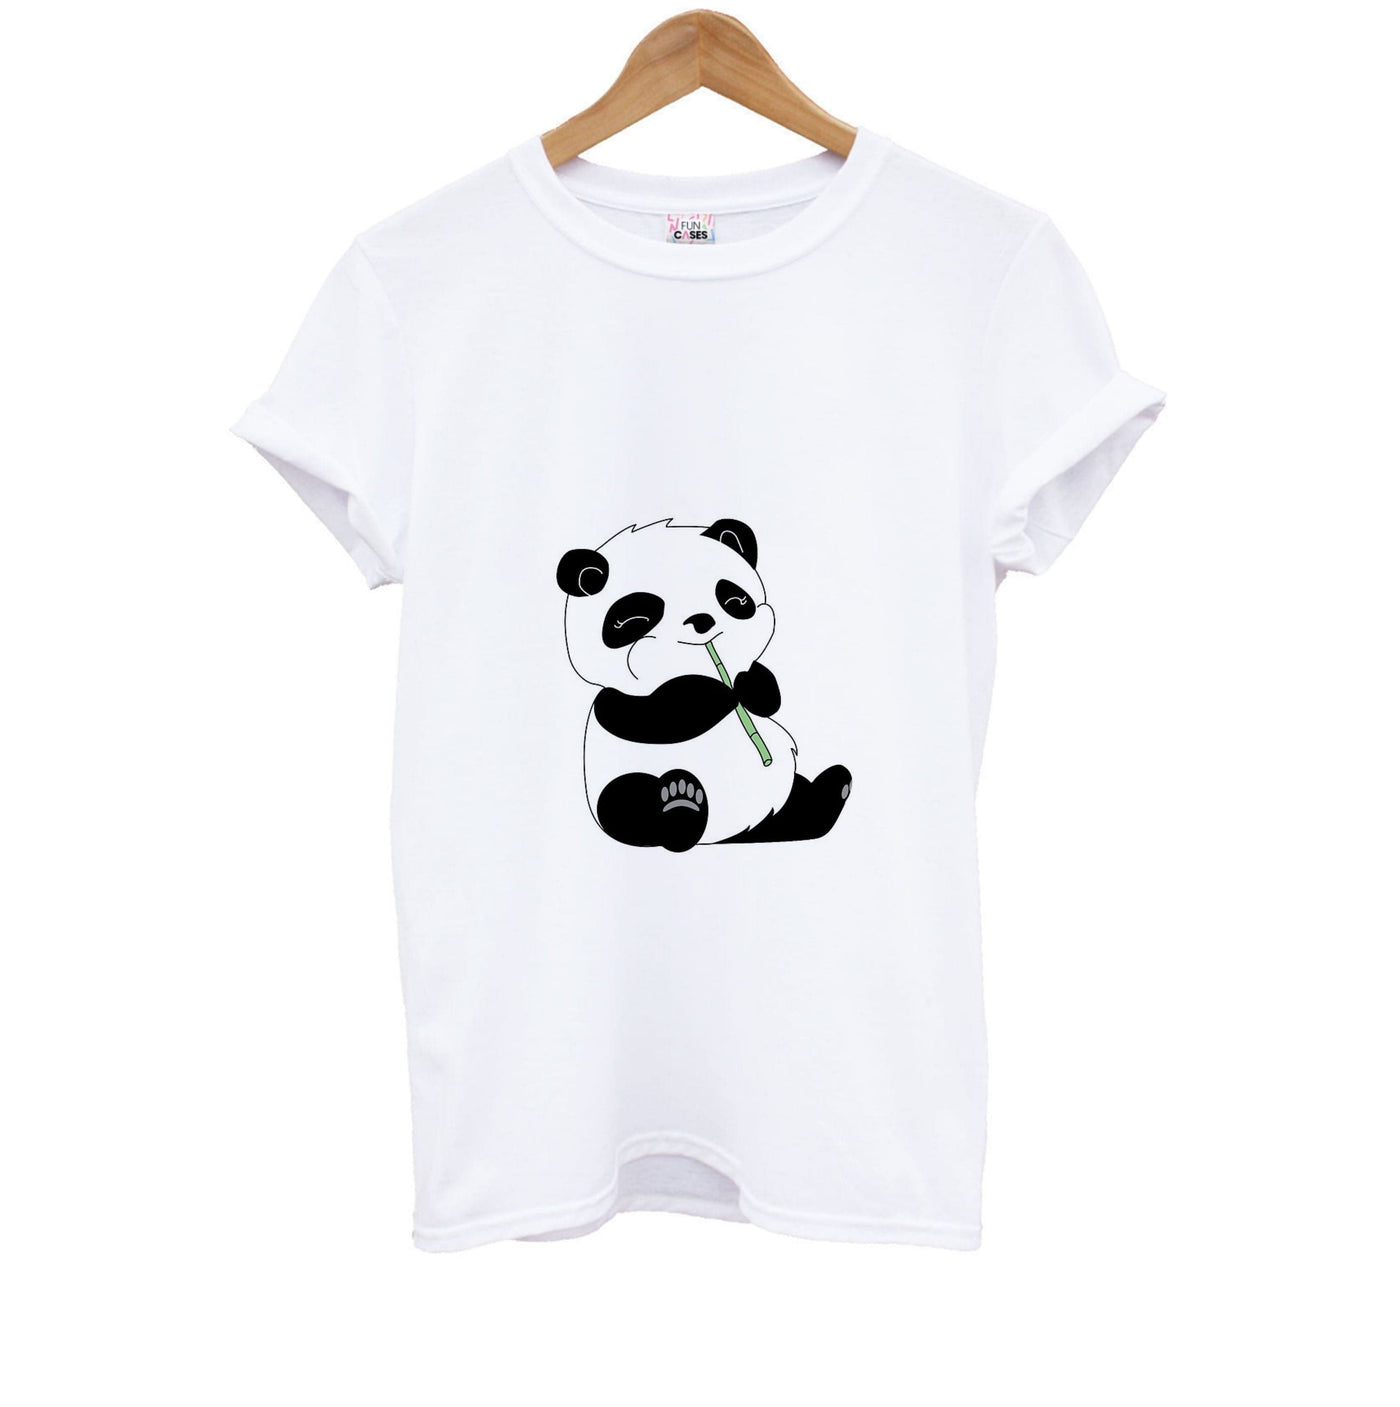 Vegan Panda Kids T-Shirt